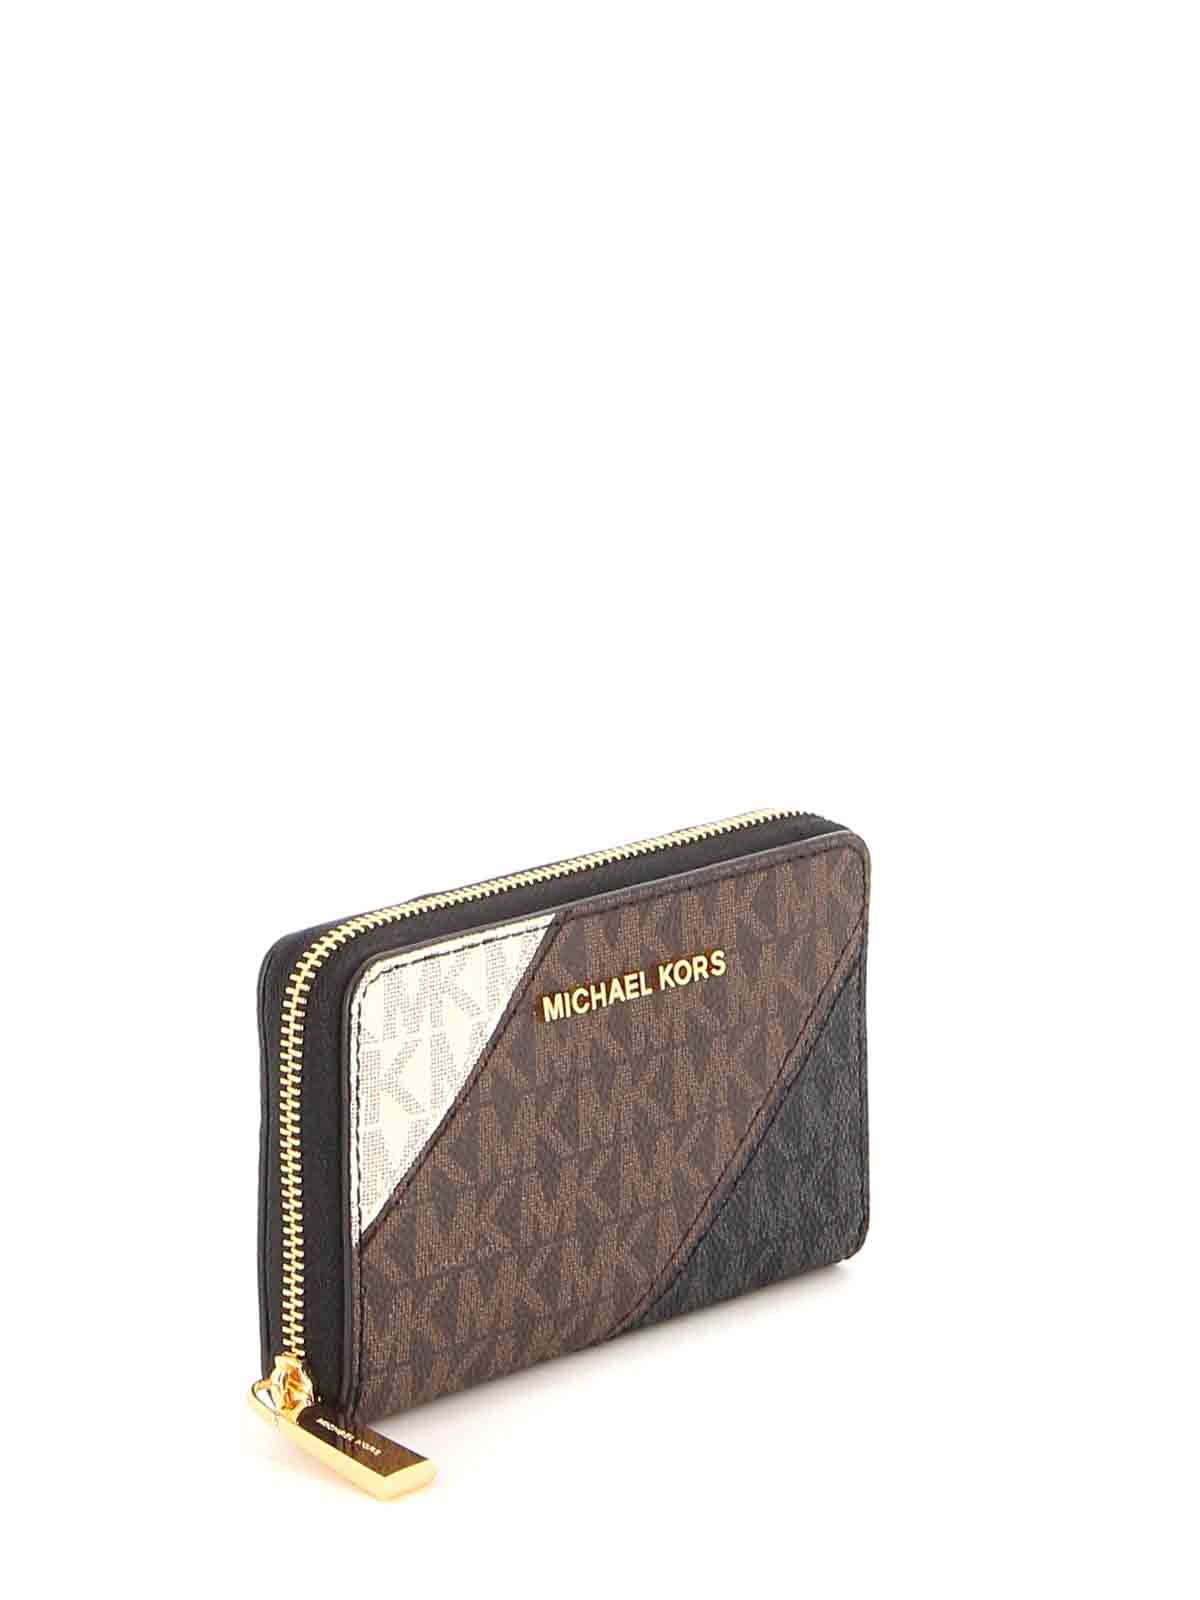 michael kors small wallet purse